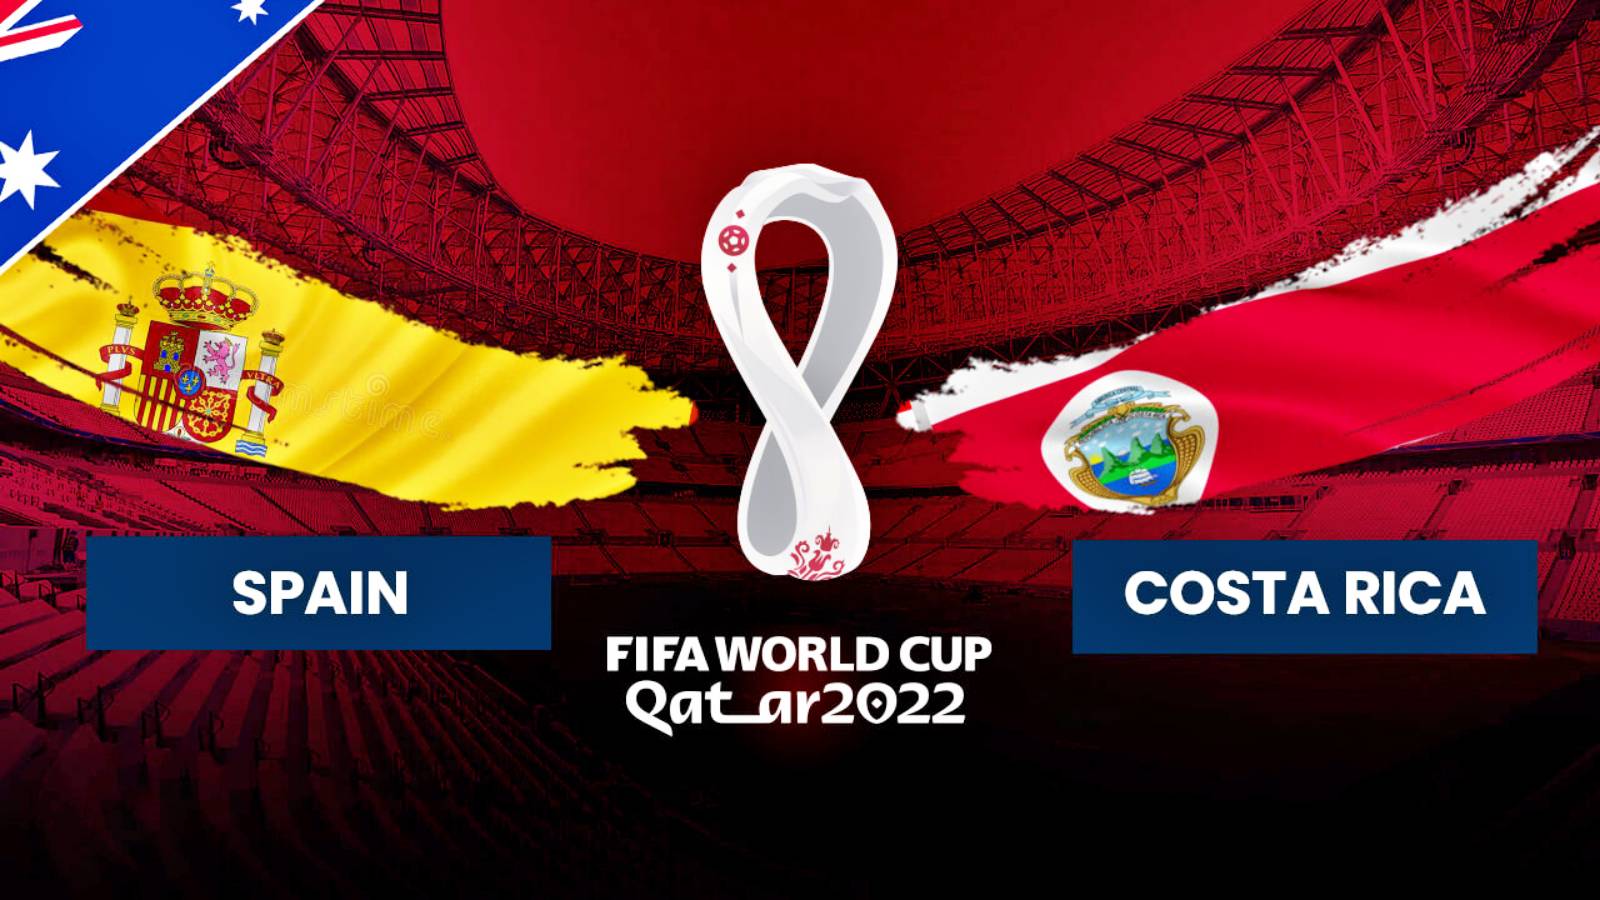 SPANIEN - COSTA RICA LIVE TVR 1 VM 2022 QATAR